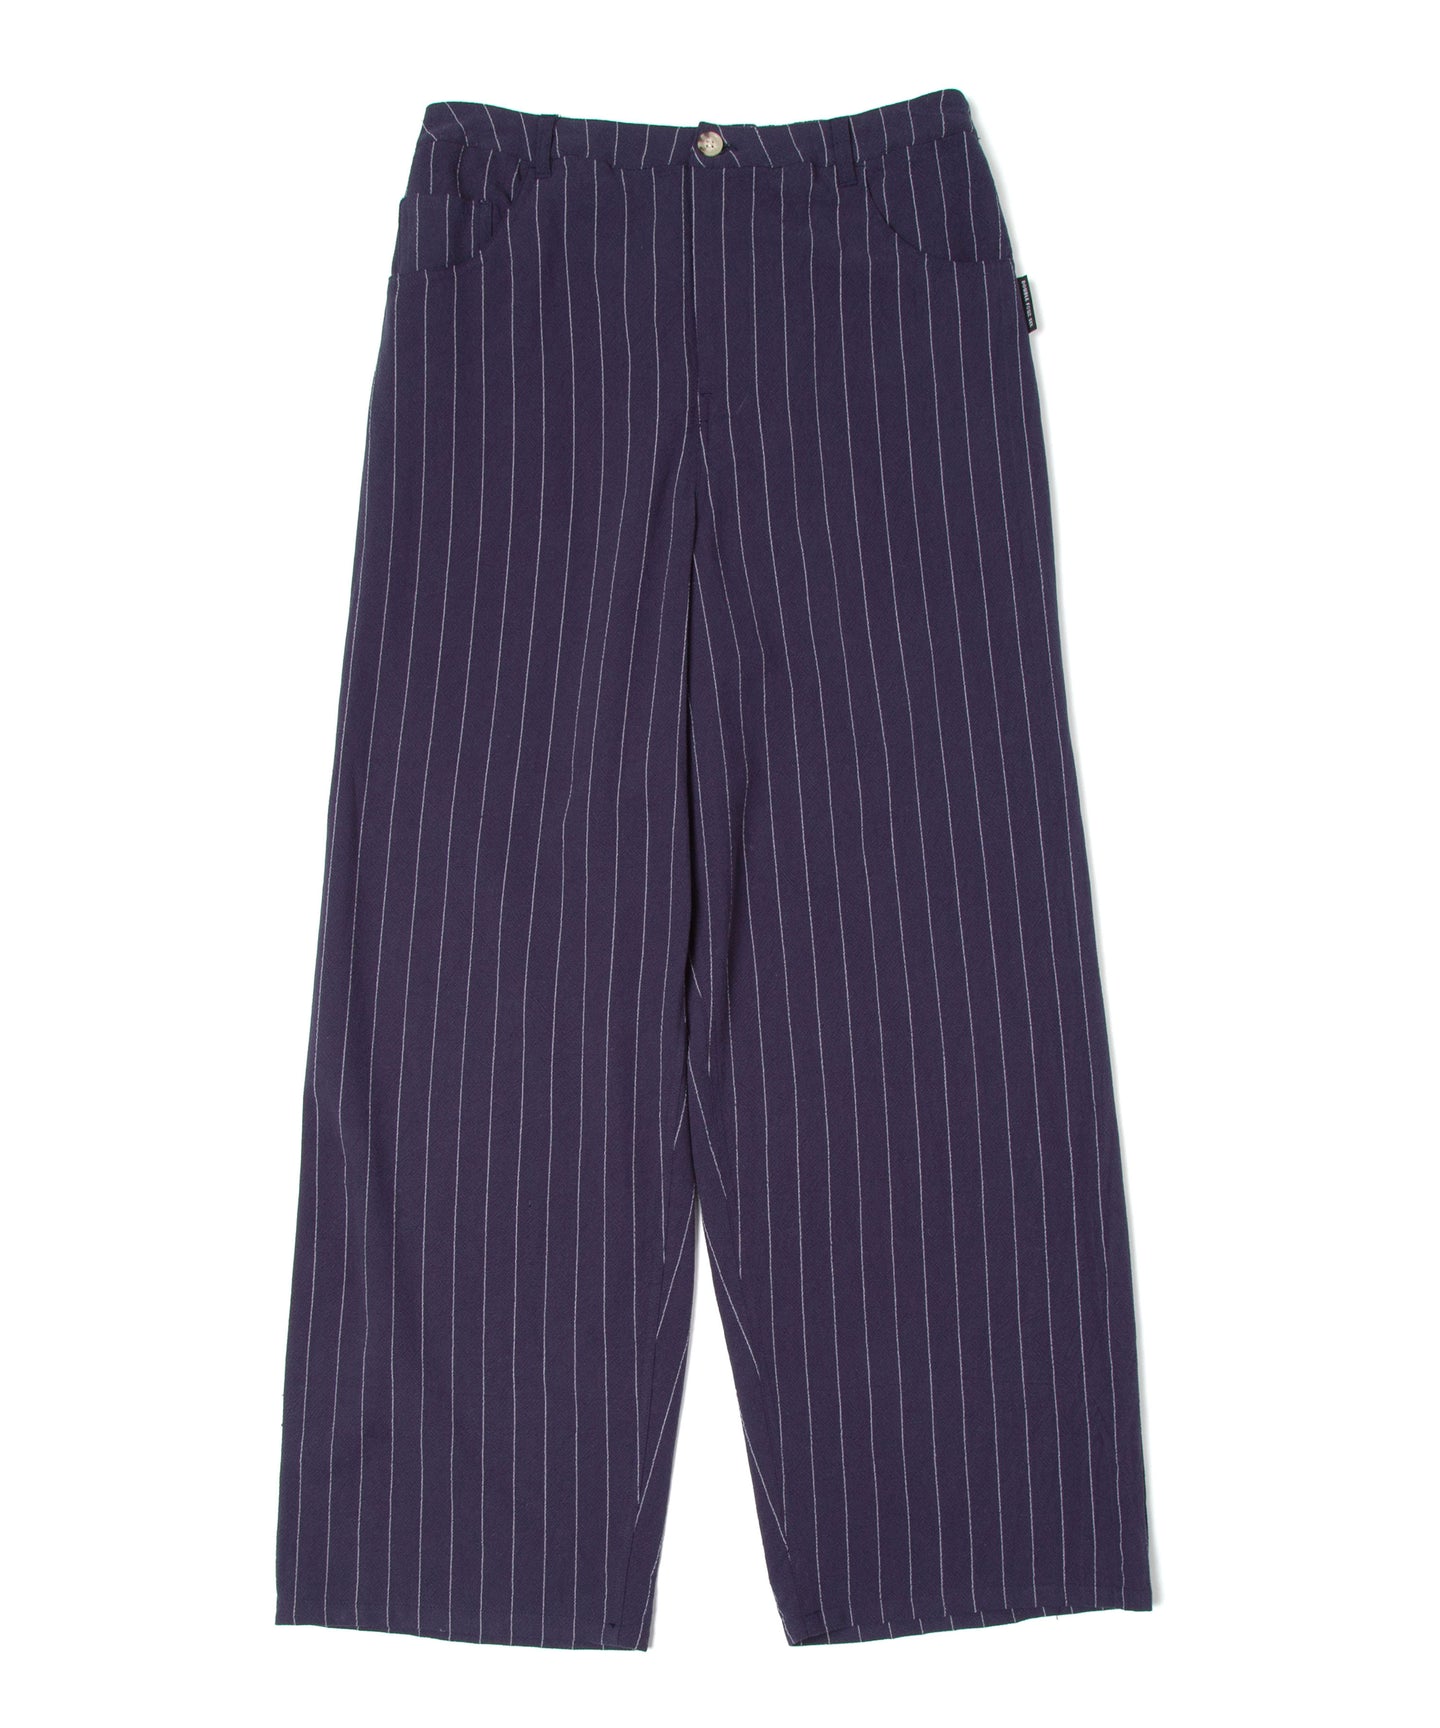 【数量限定商品】Linen Stripe Wide Pants  Navy